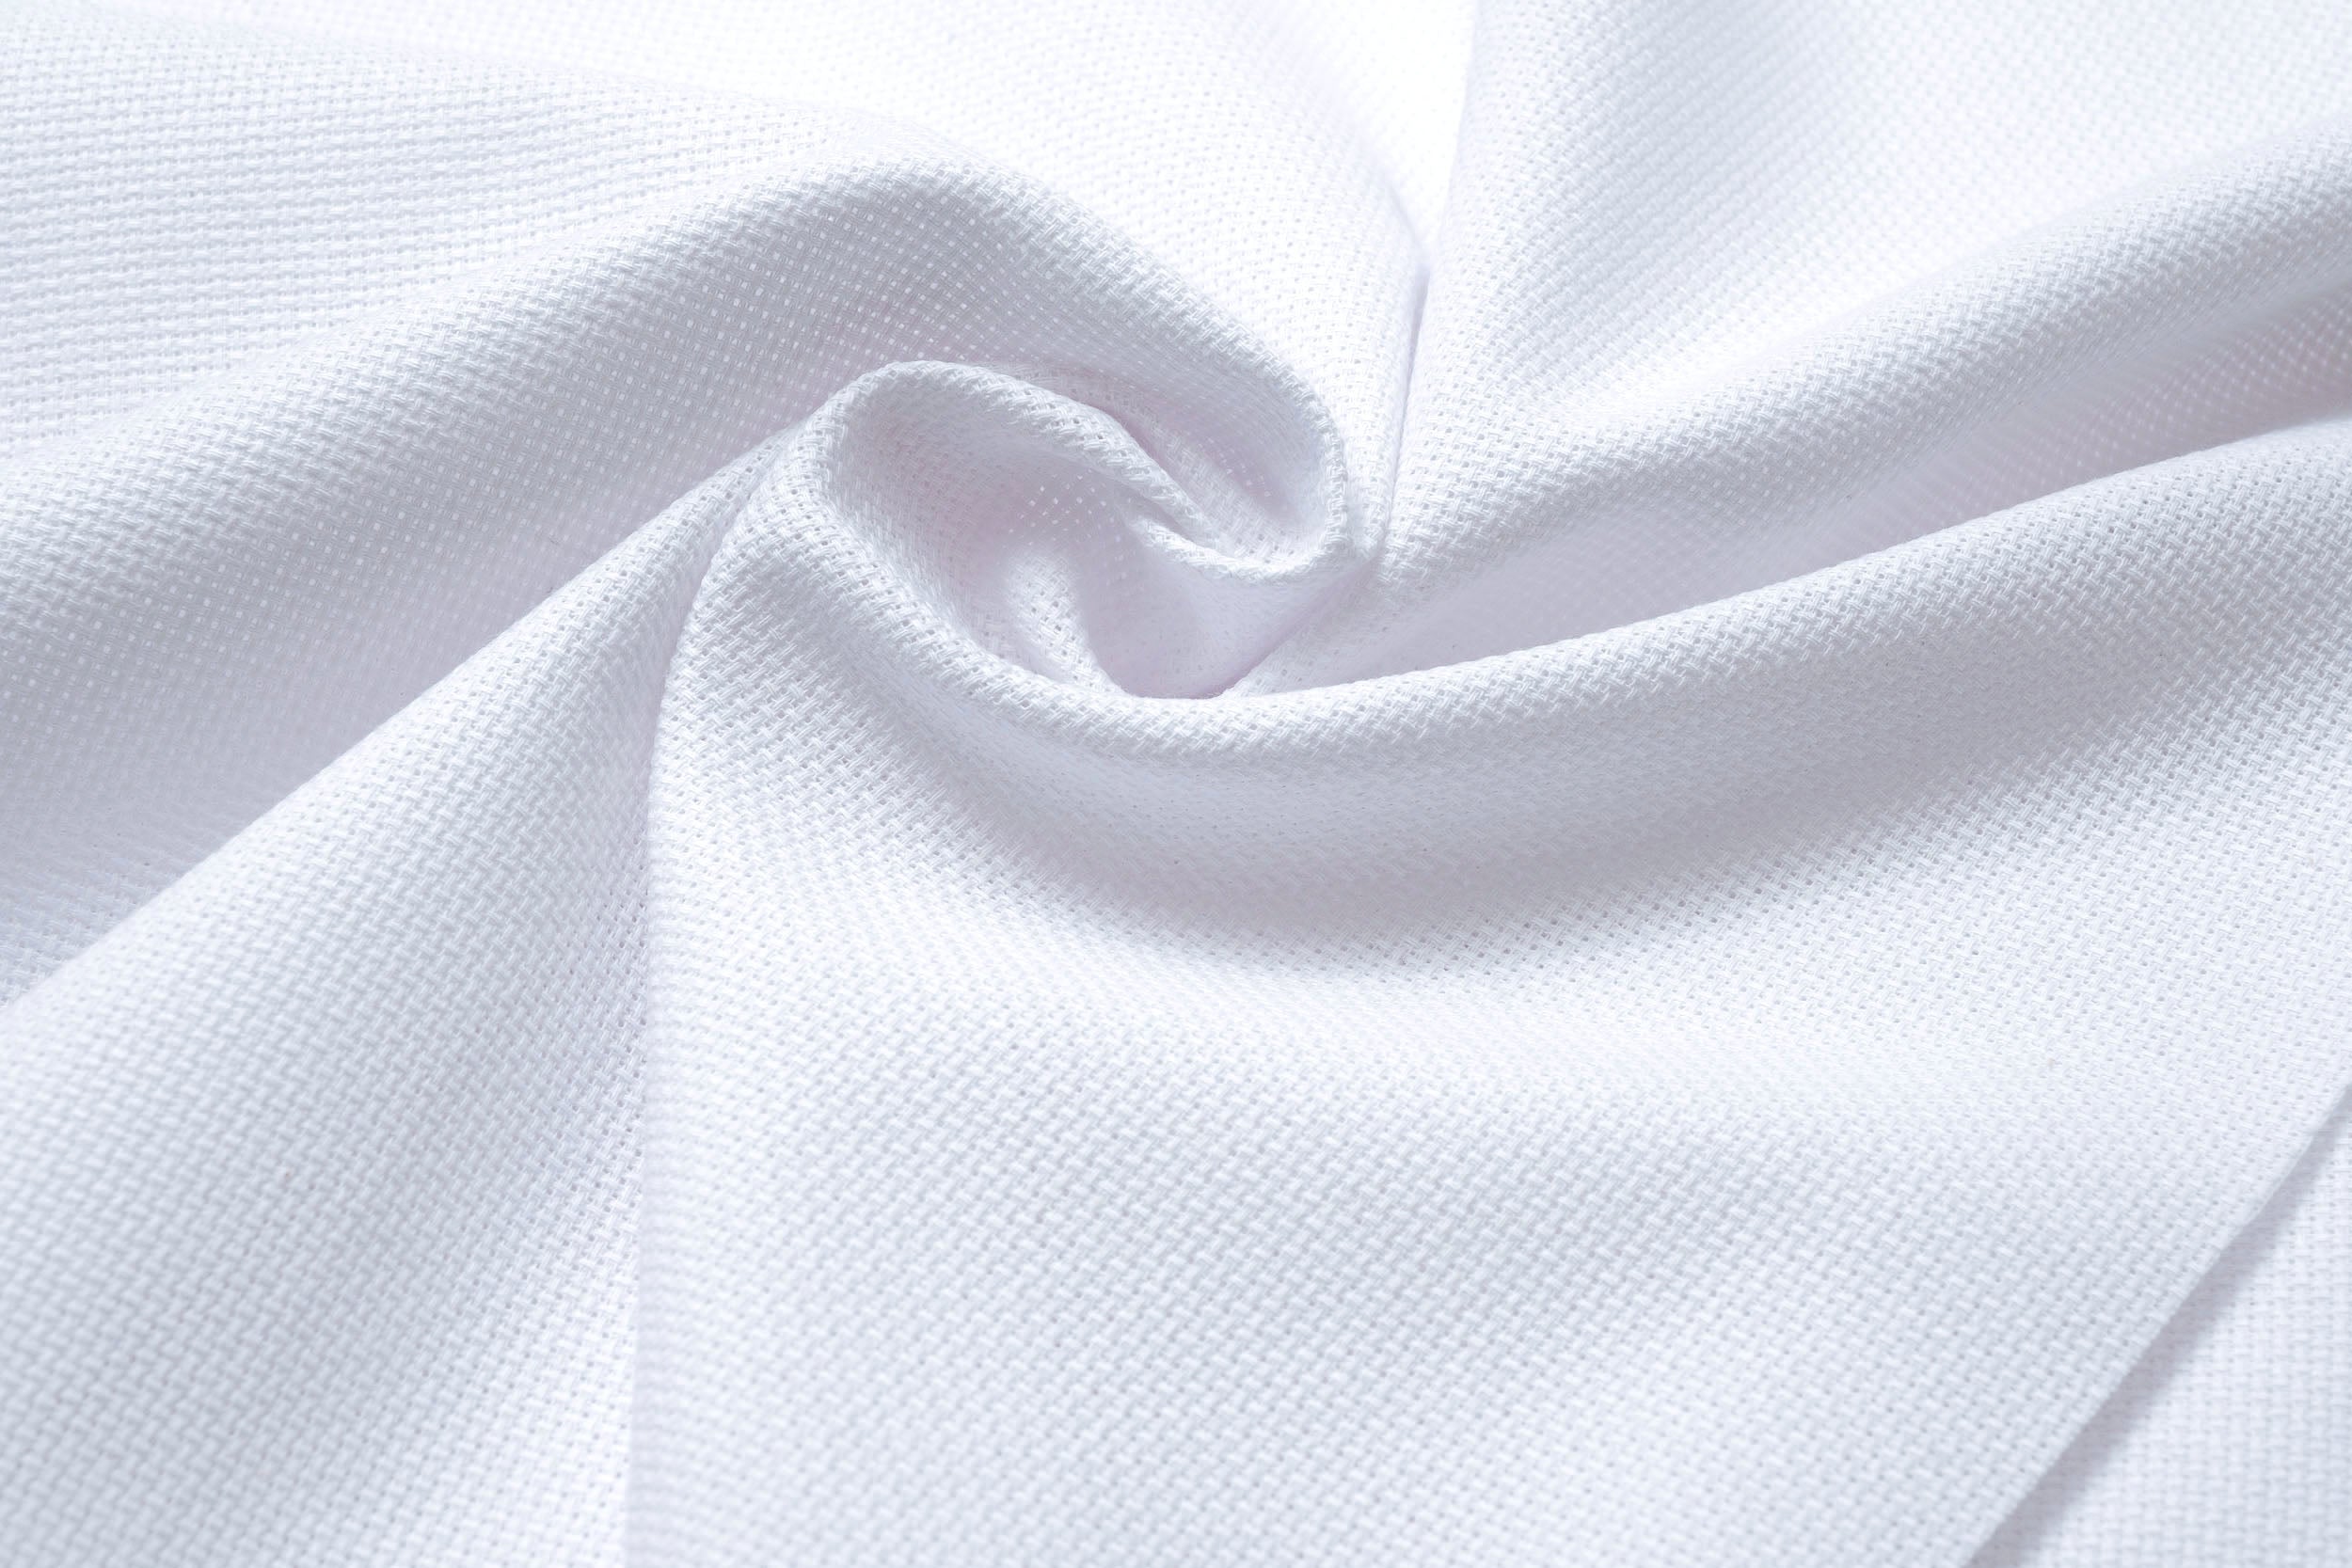 SOFT White AIDA Cloth 14 Count